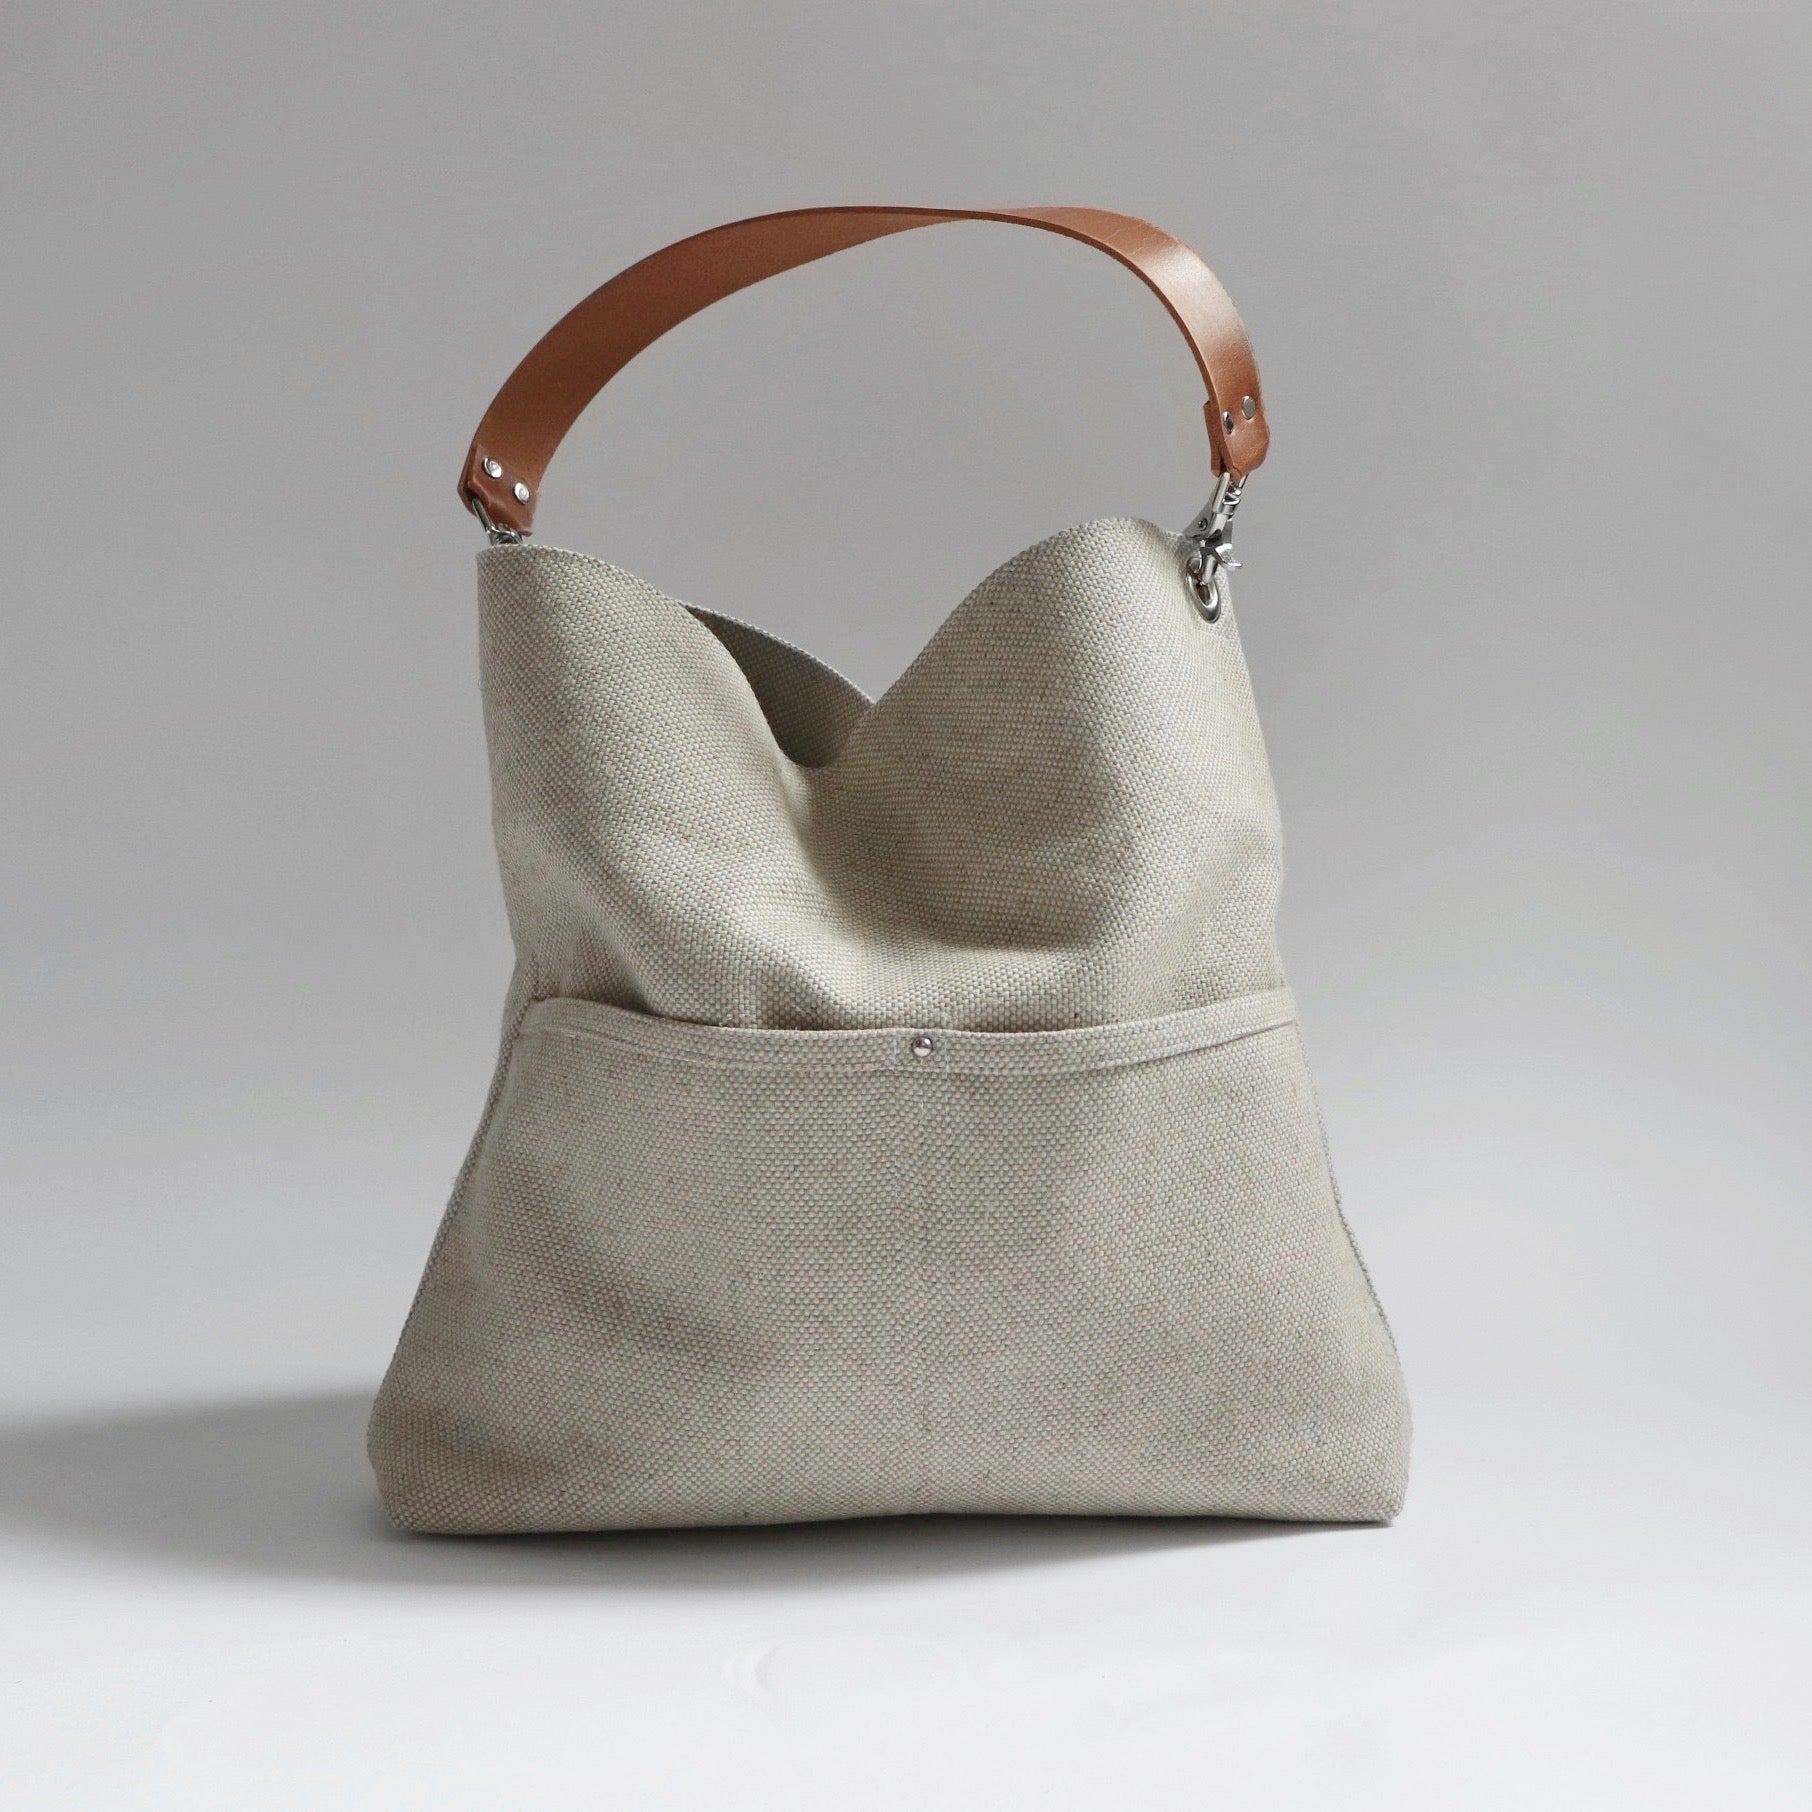 Casual Summer Shoulder Bag in Natural Woven Linen